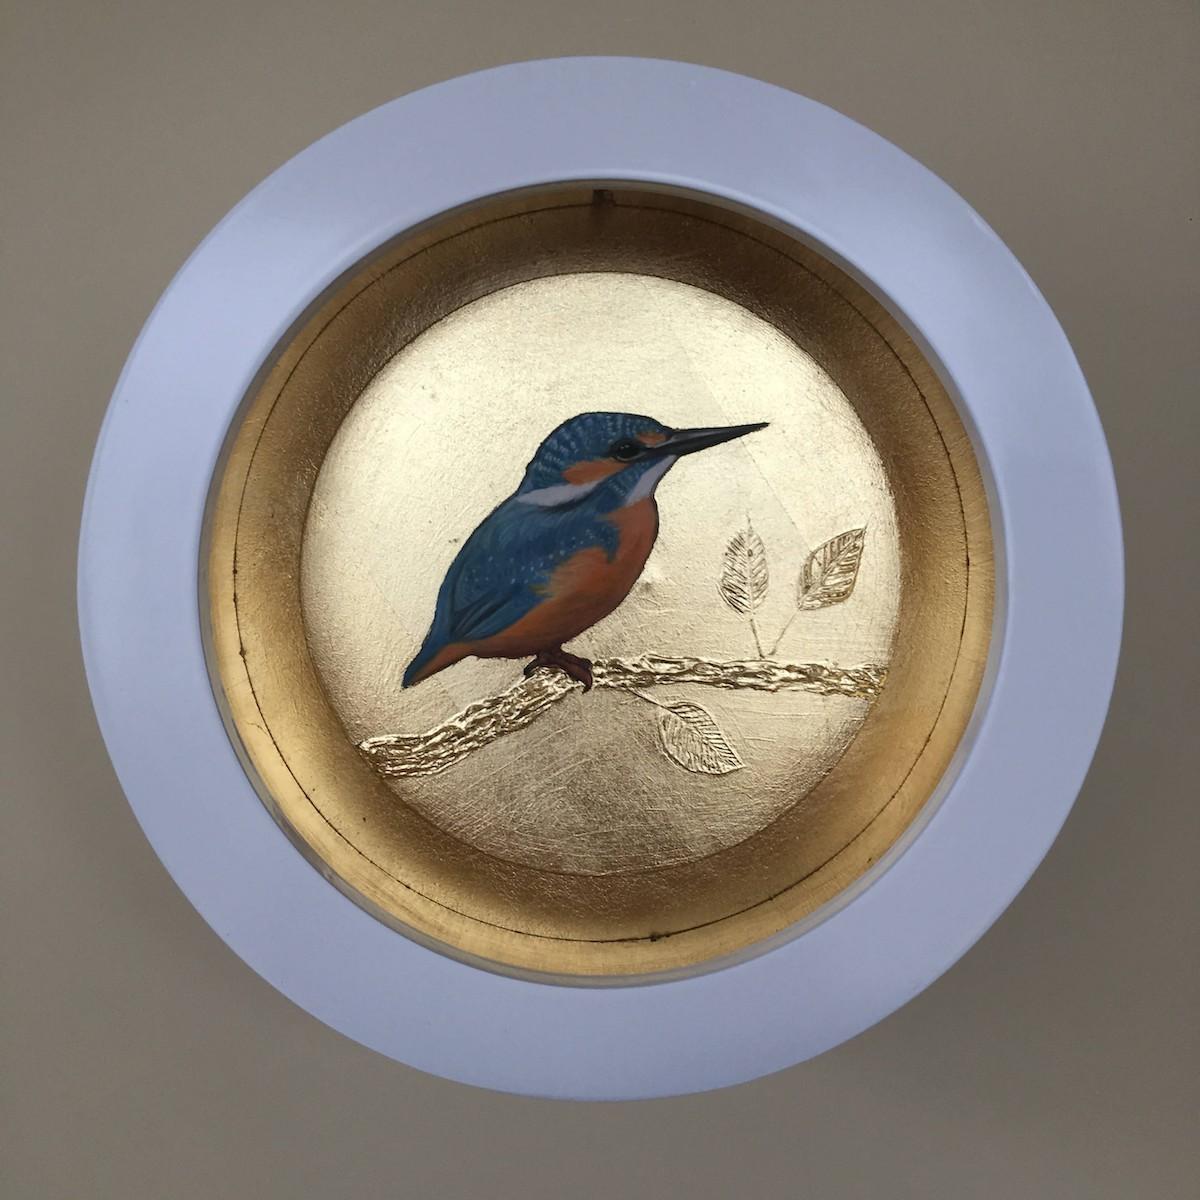 Kingfisher, Sally Ann-Johns, dessin original à vendre, art à la feuille d'or